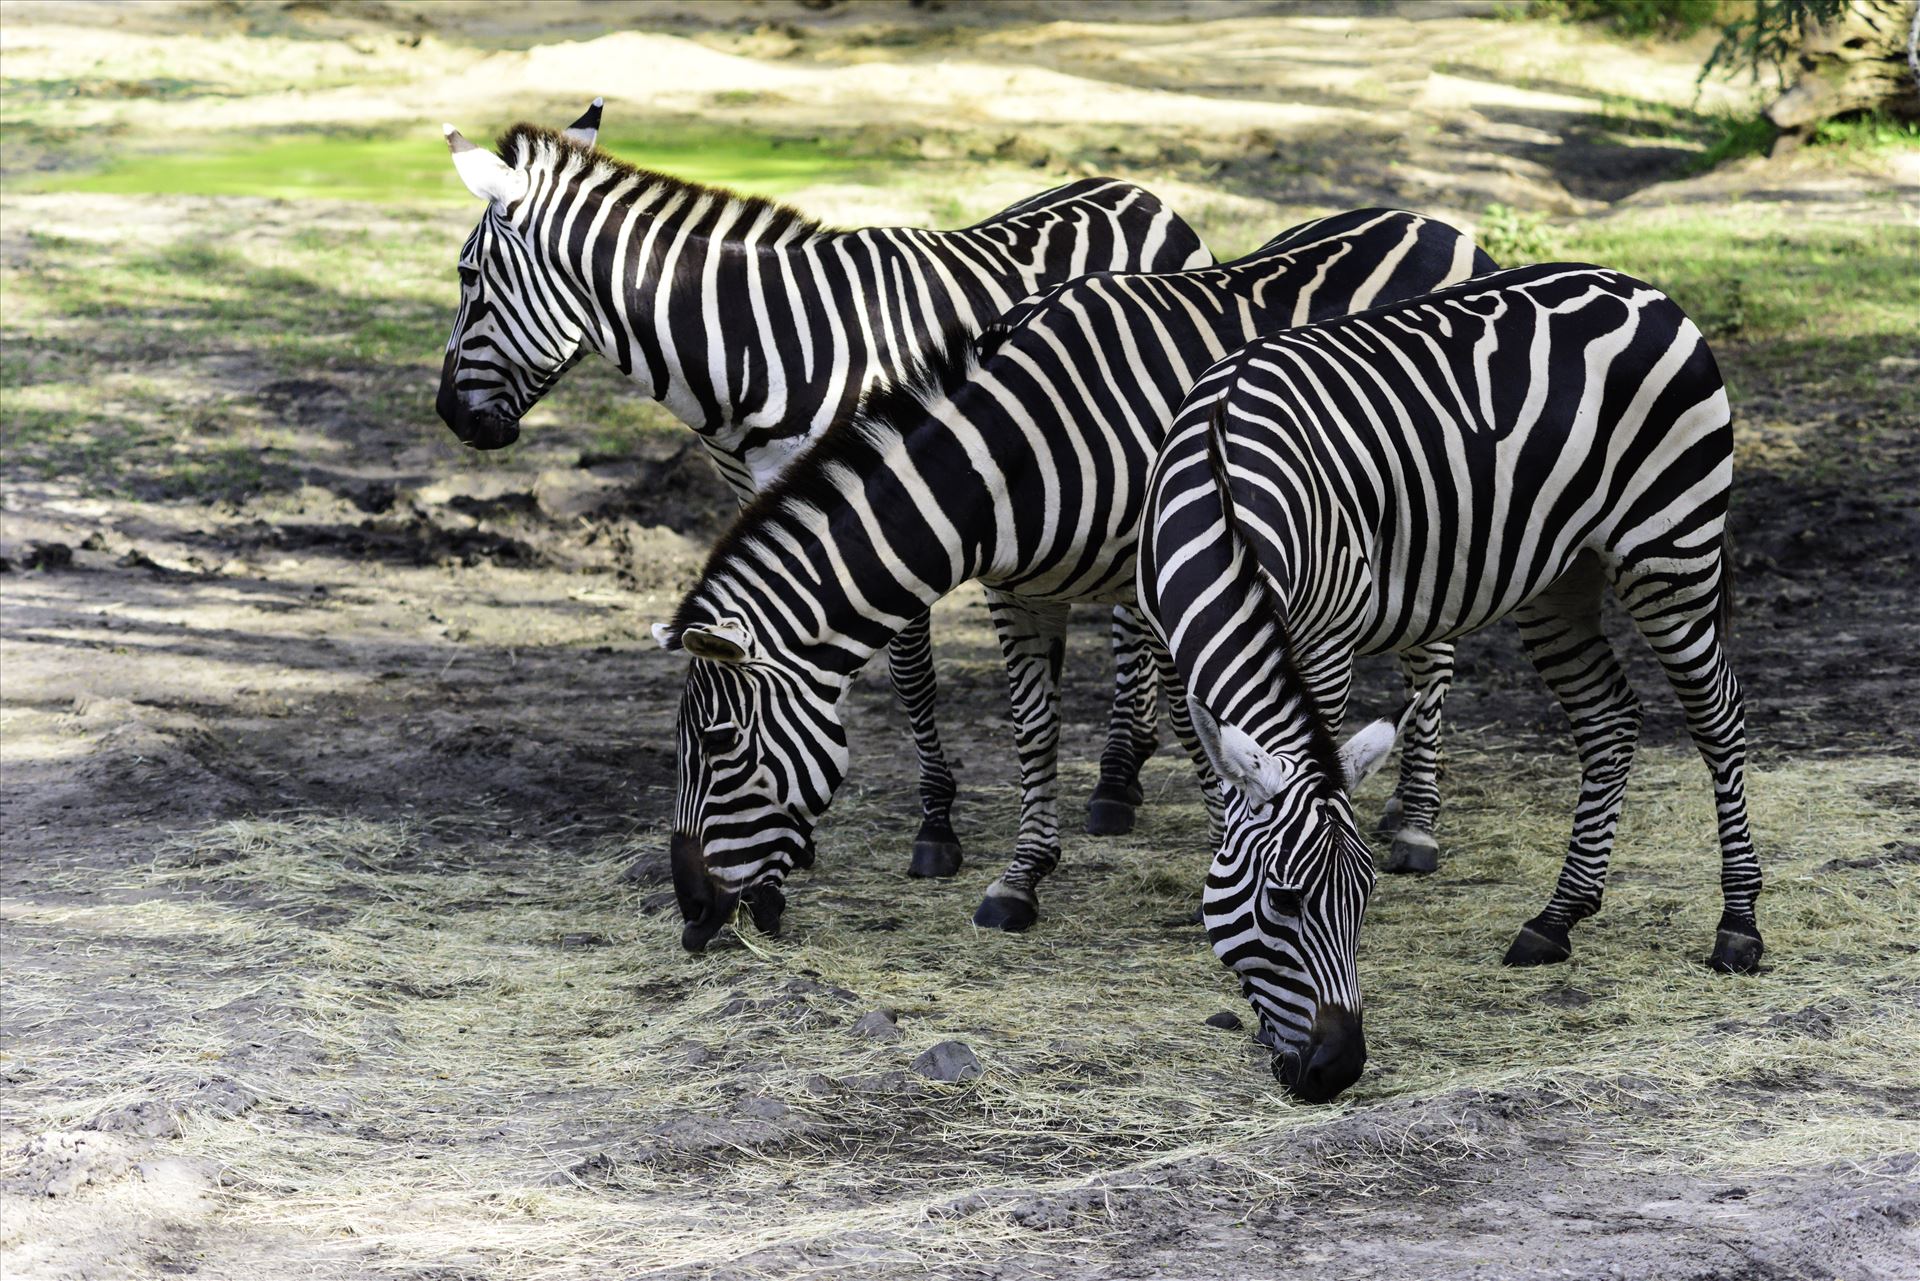 zebras.jpg Three zebras at Kilimanjaro Safaris Disney's Animal Kingdom theme park by Terry Kelly Photography